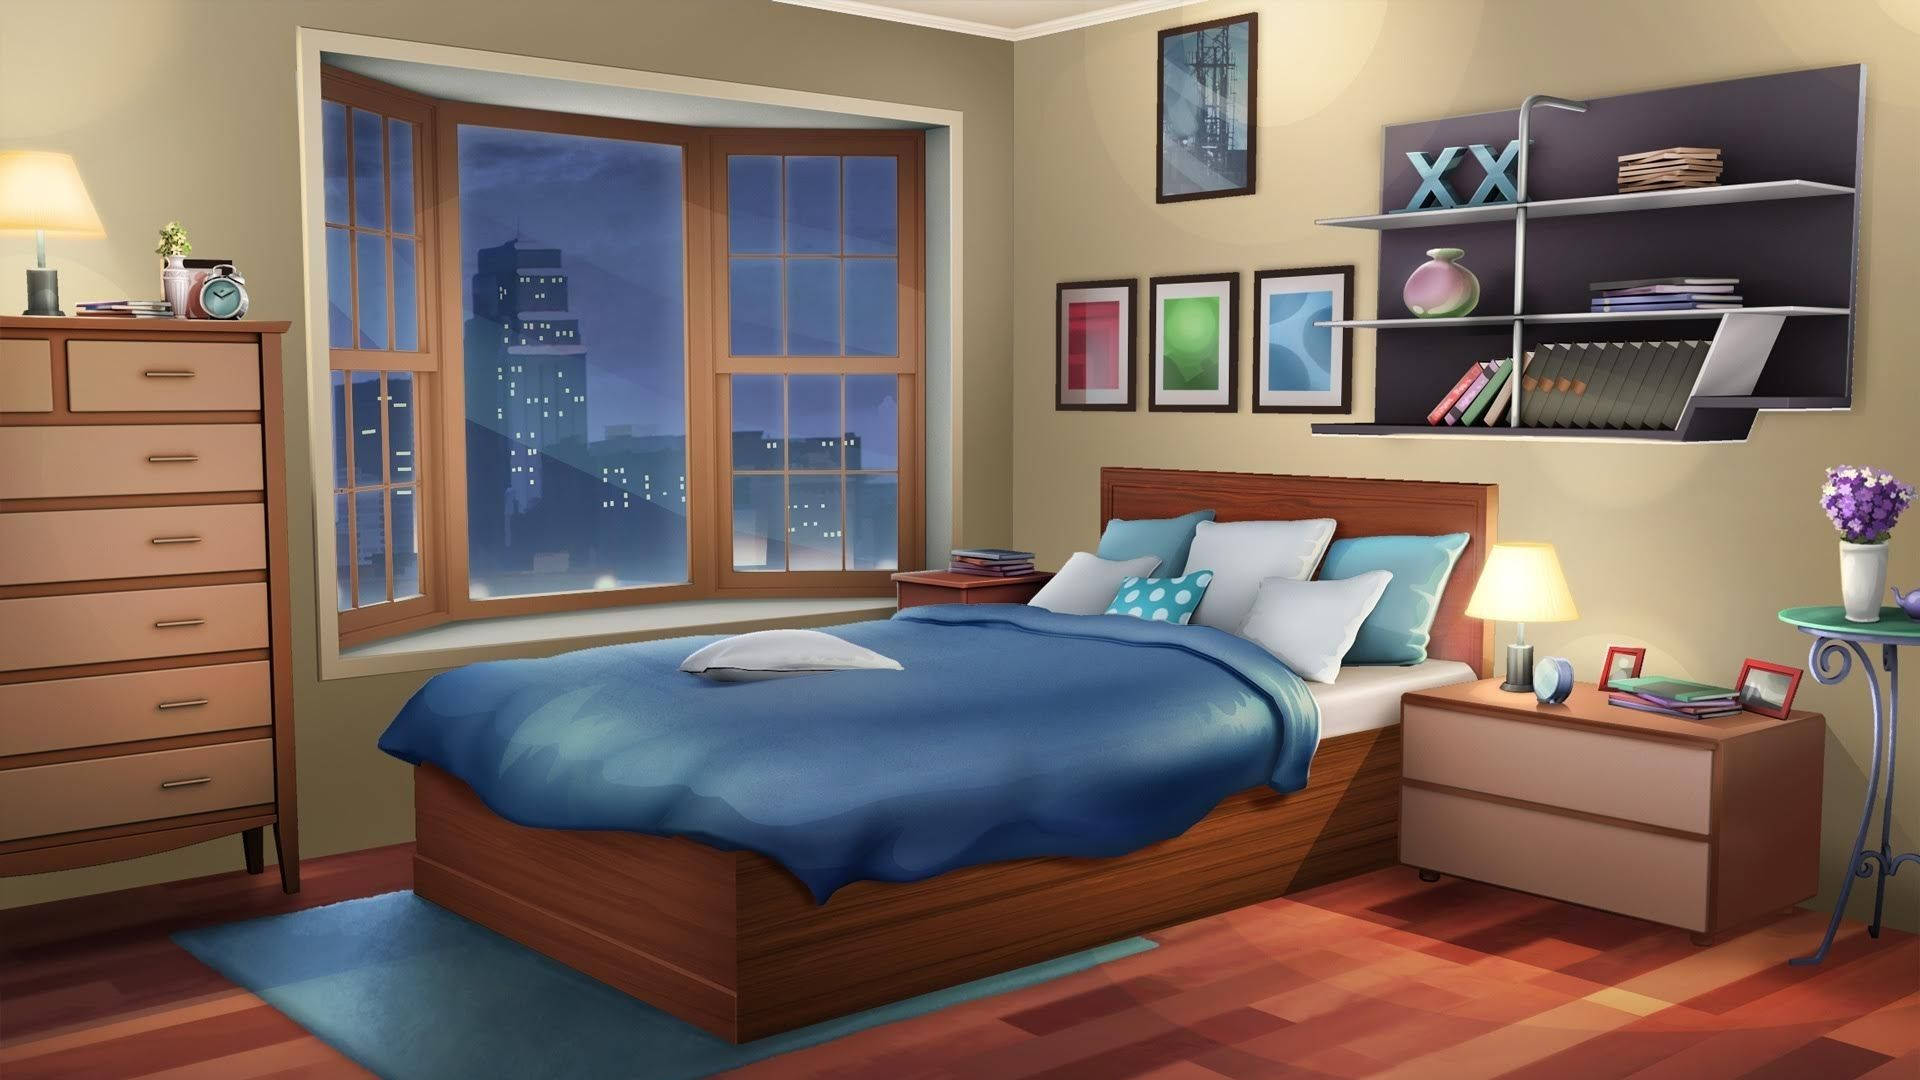 Anime Room At Night Wallpaper